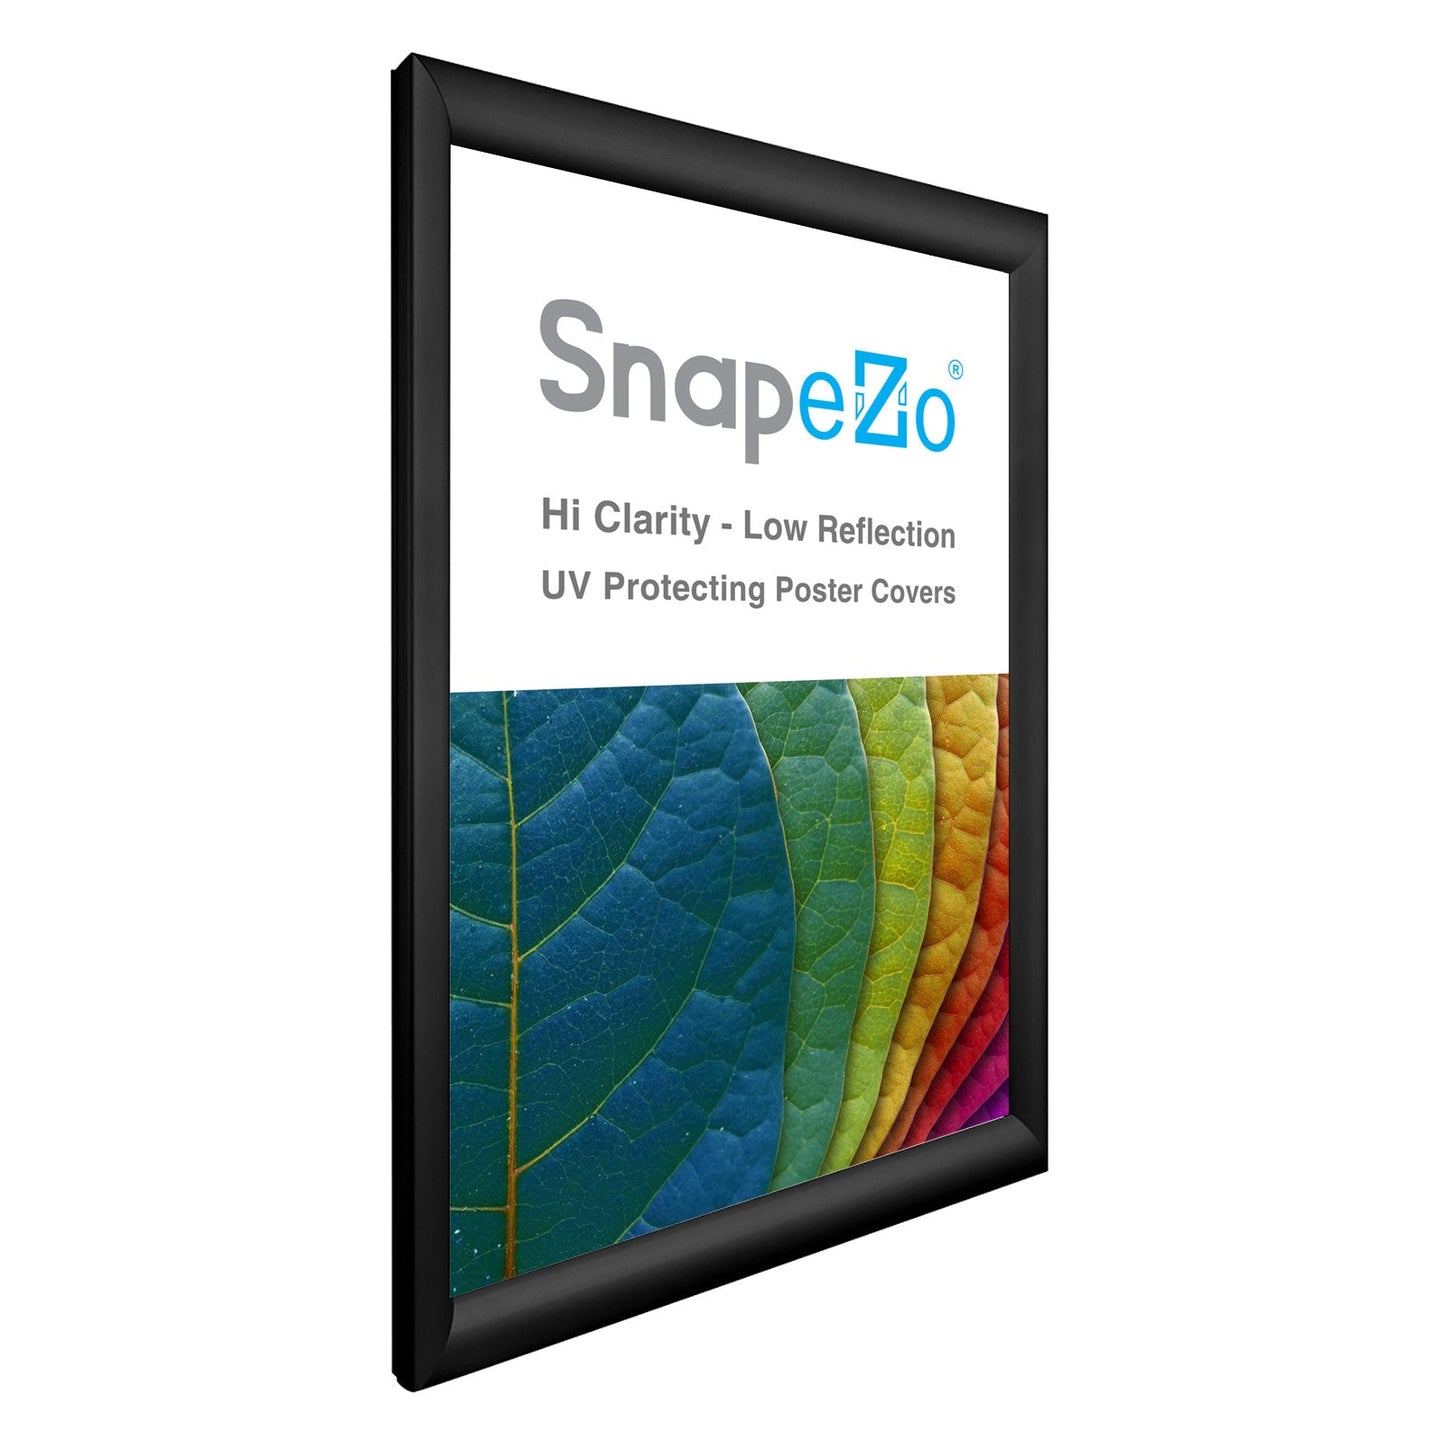 20x30 Black SnapeZo® Snap Frame - 1.2" Profile